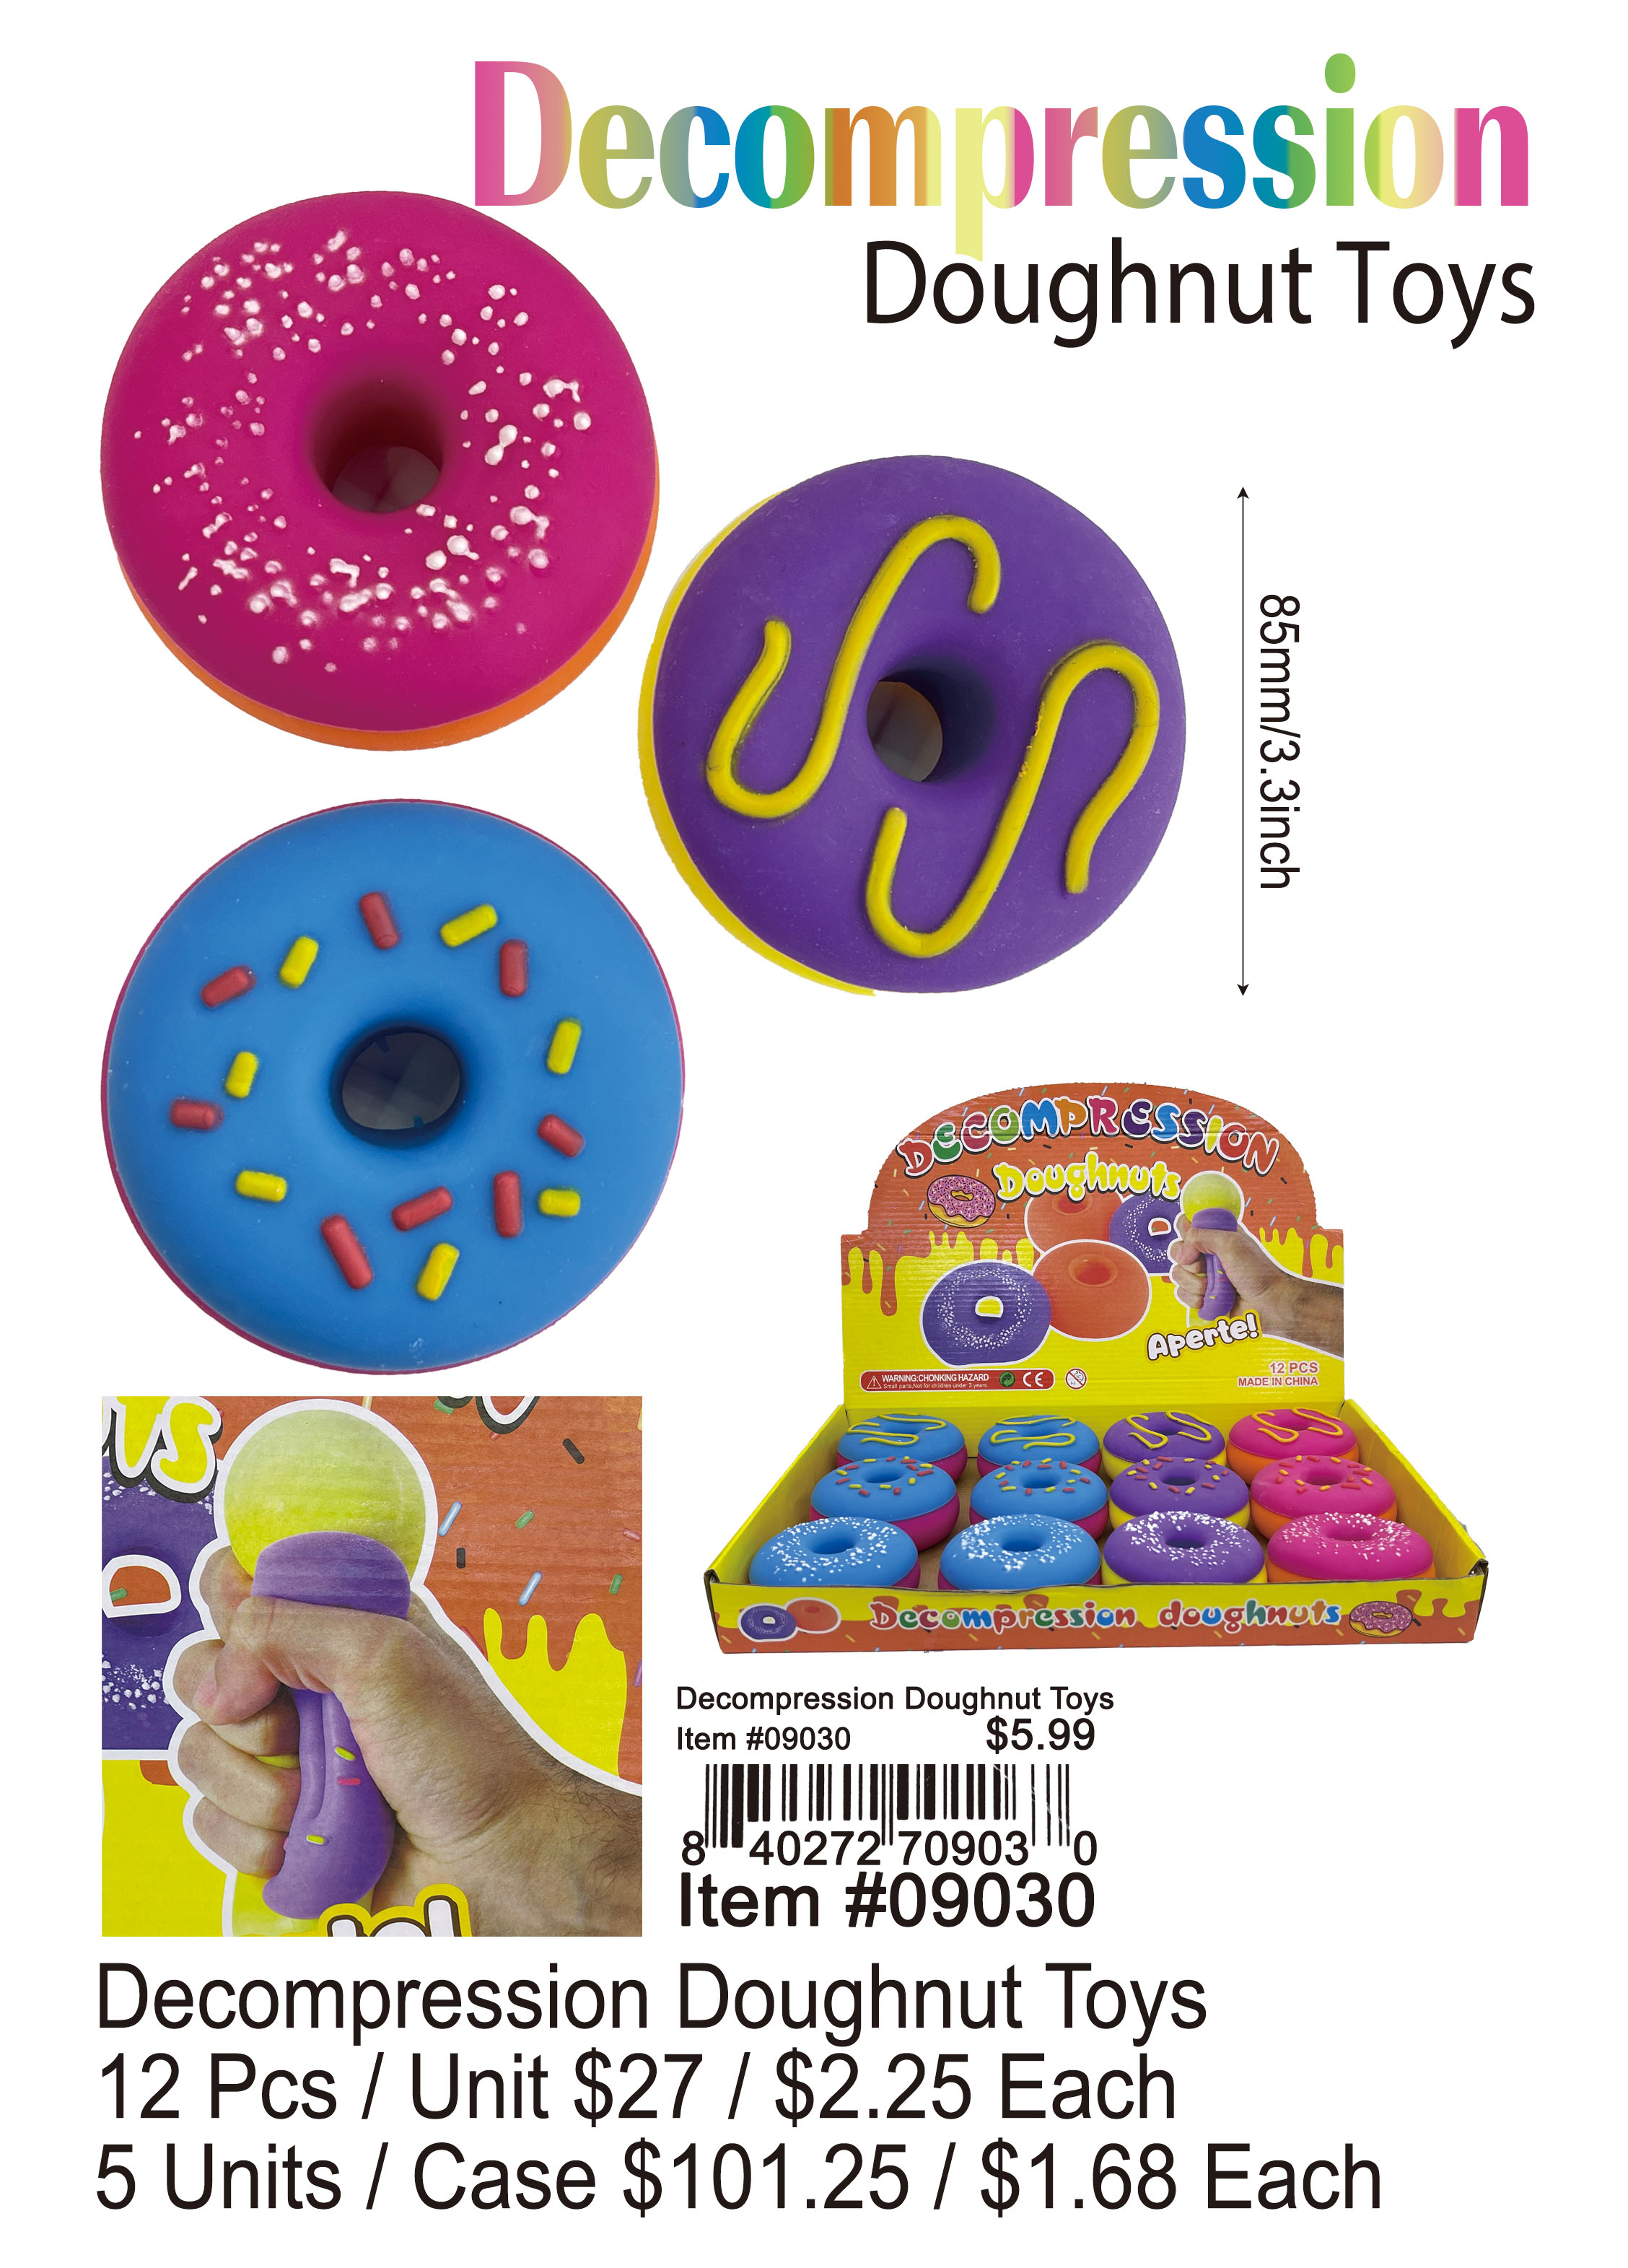 Decompression Doughnut Toys